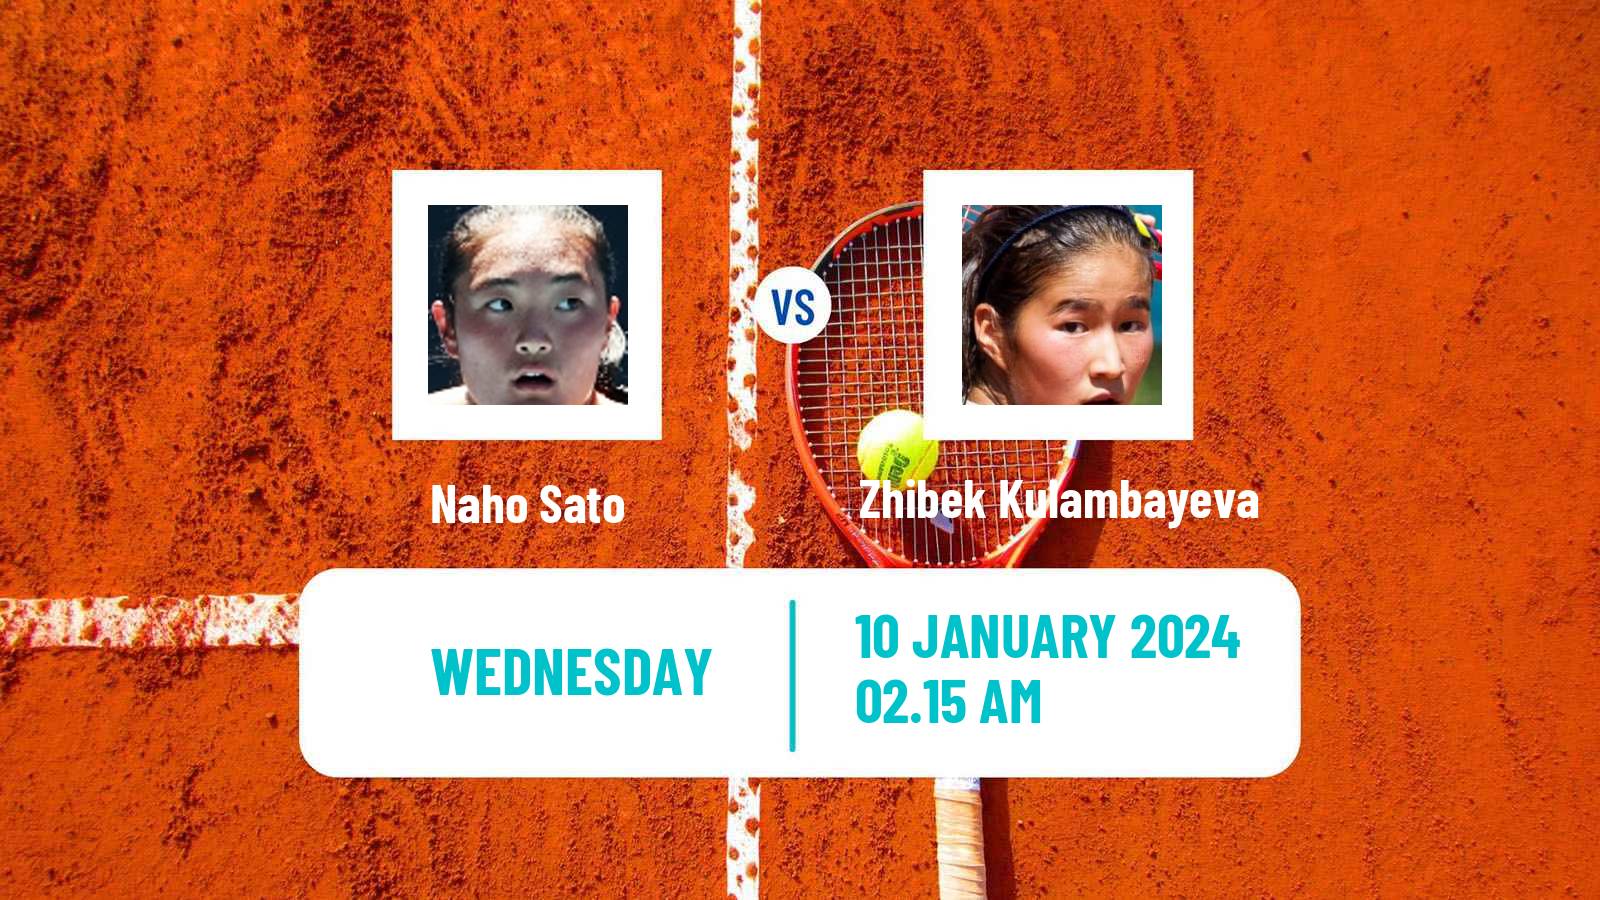 Tennis ITF W50 Nonthaburi 2 Women Naho Sato - Zhibek Kulambayeva